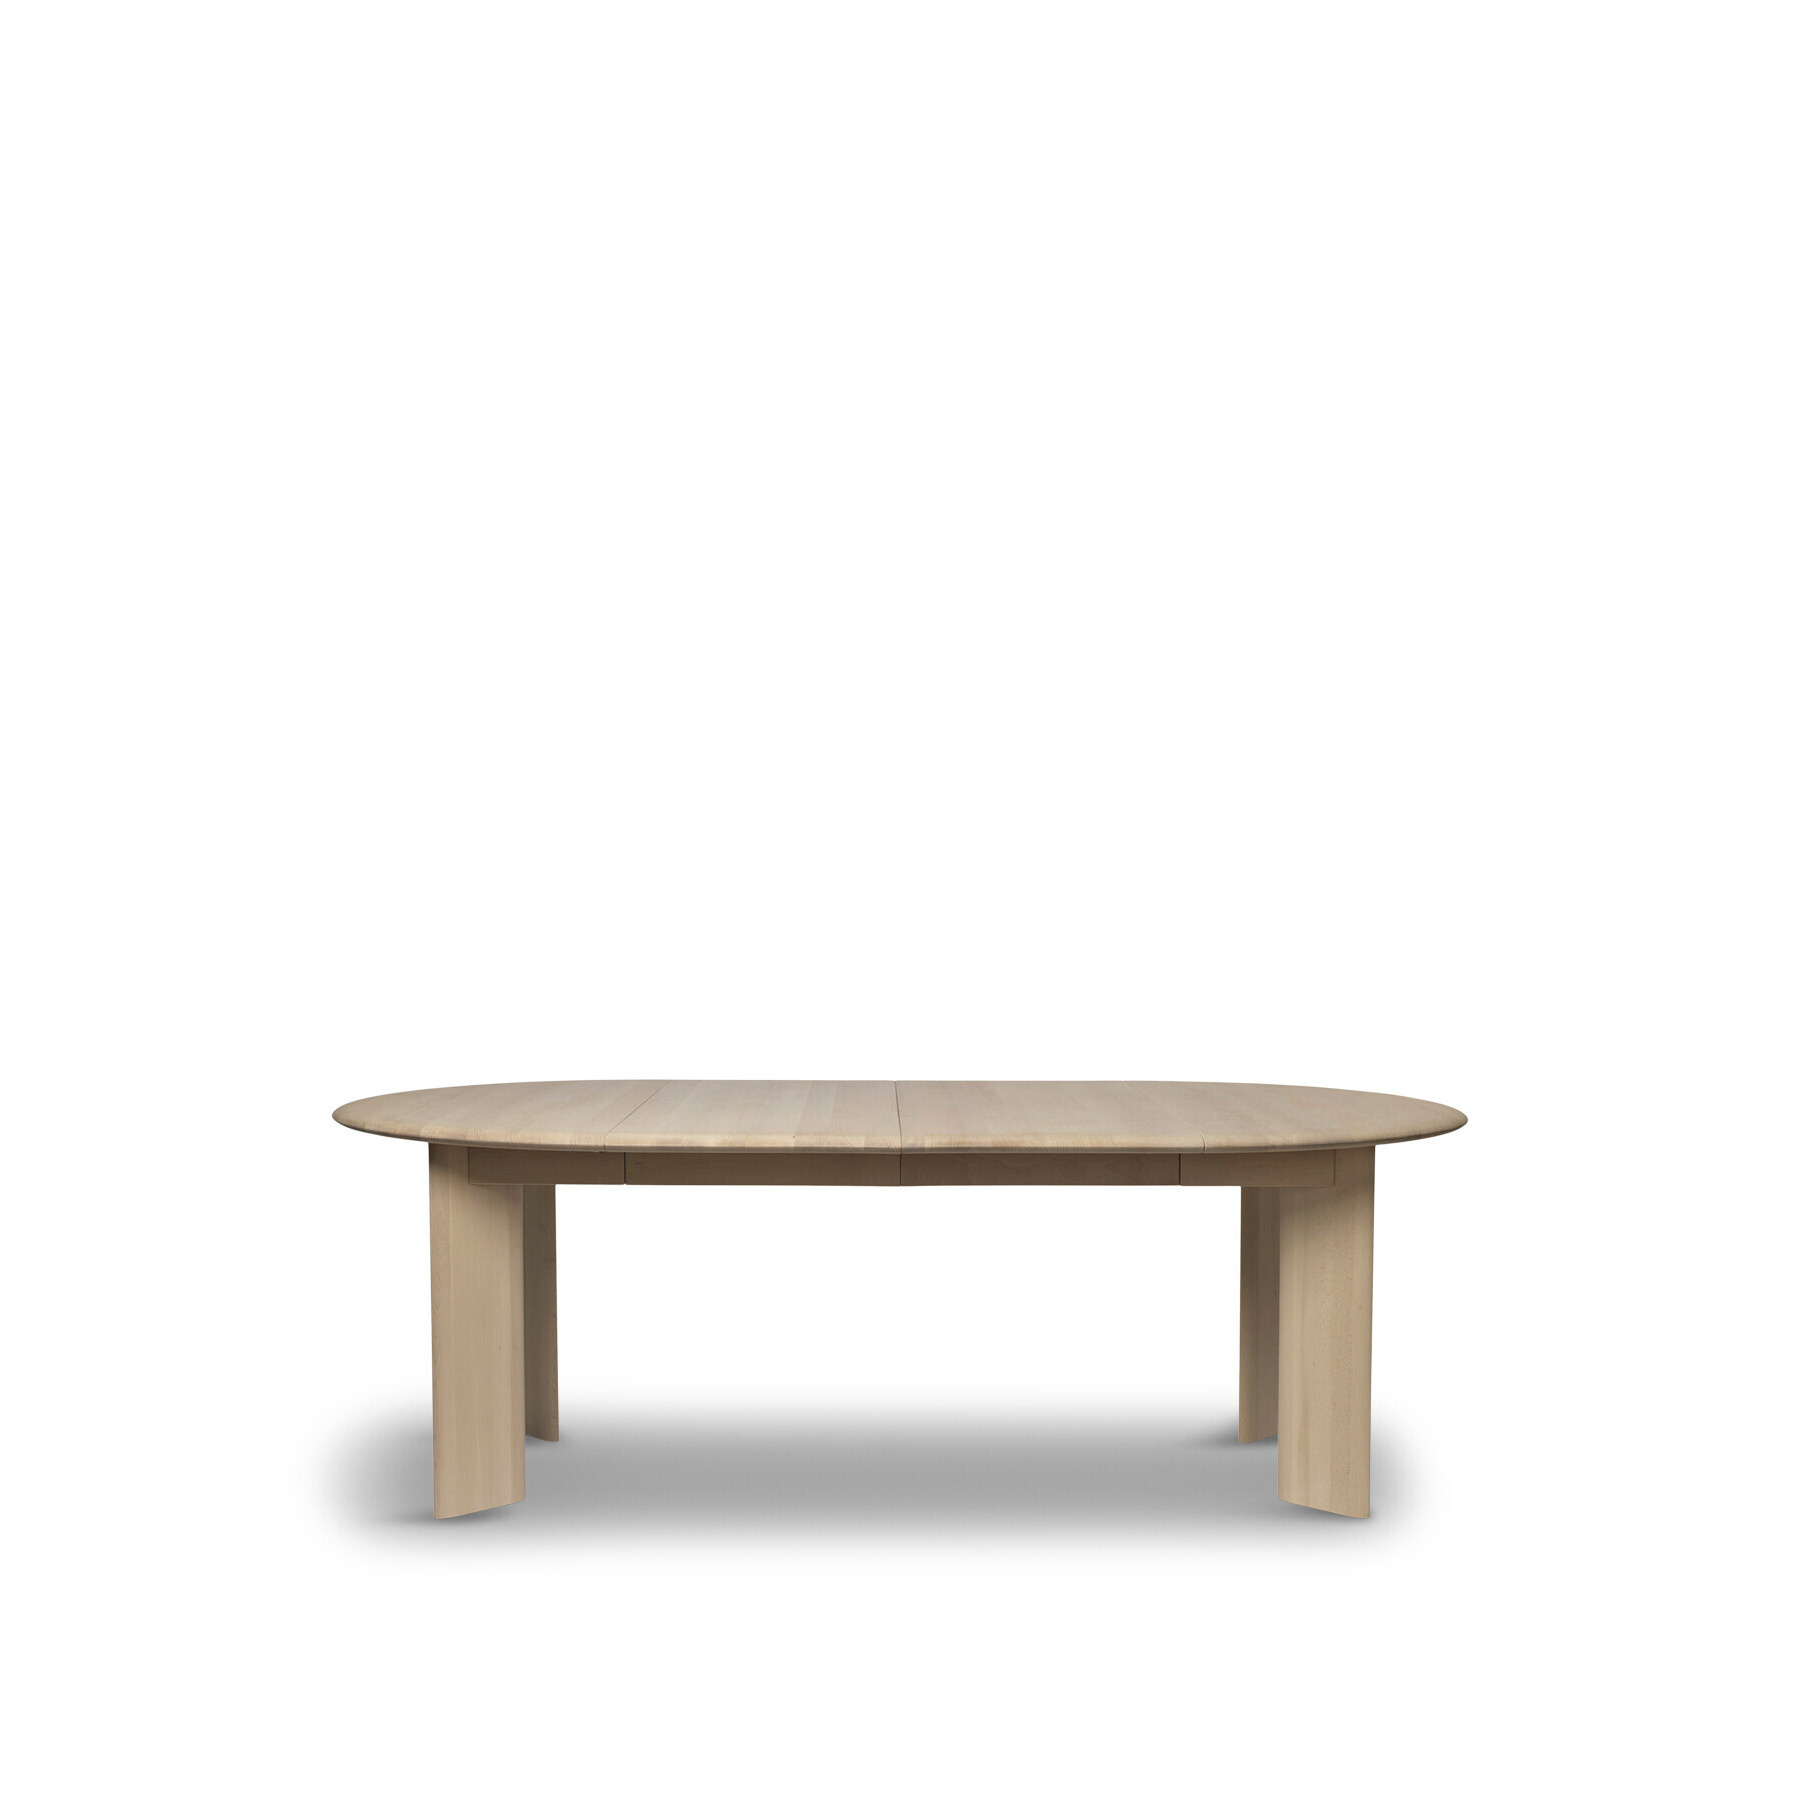 Ferm living Bevel Table Extend. x2 - White Oiled Beech - image 1